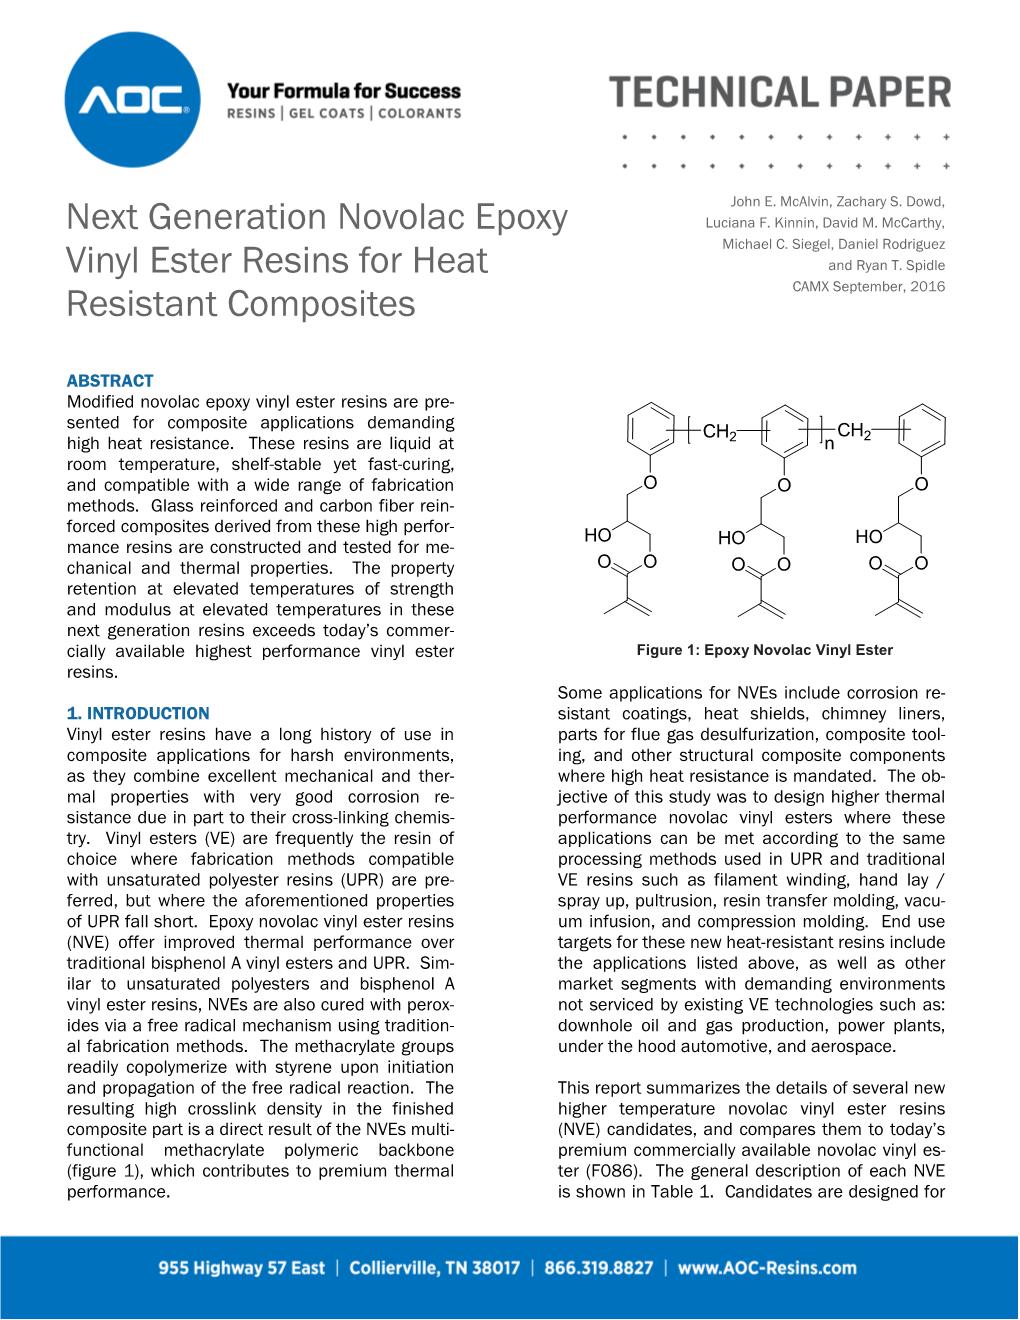 Next Generation Novolac Epoxy Vinyl Ester Resins for Heat Resistant